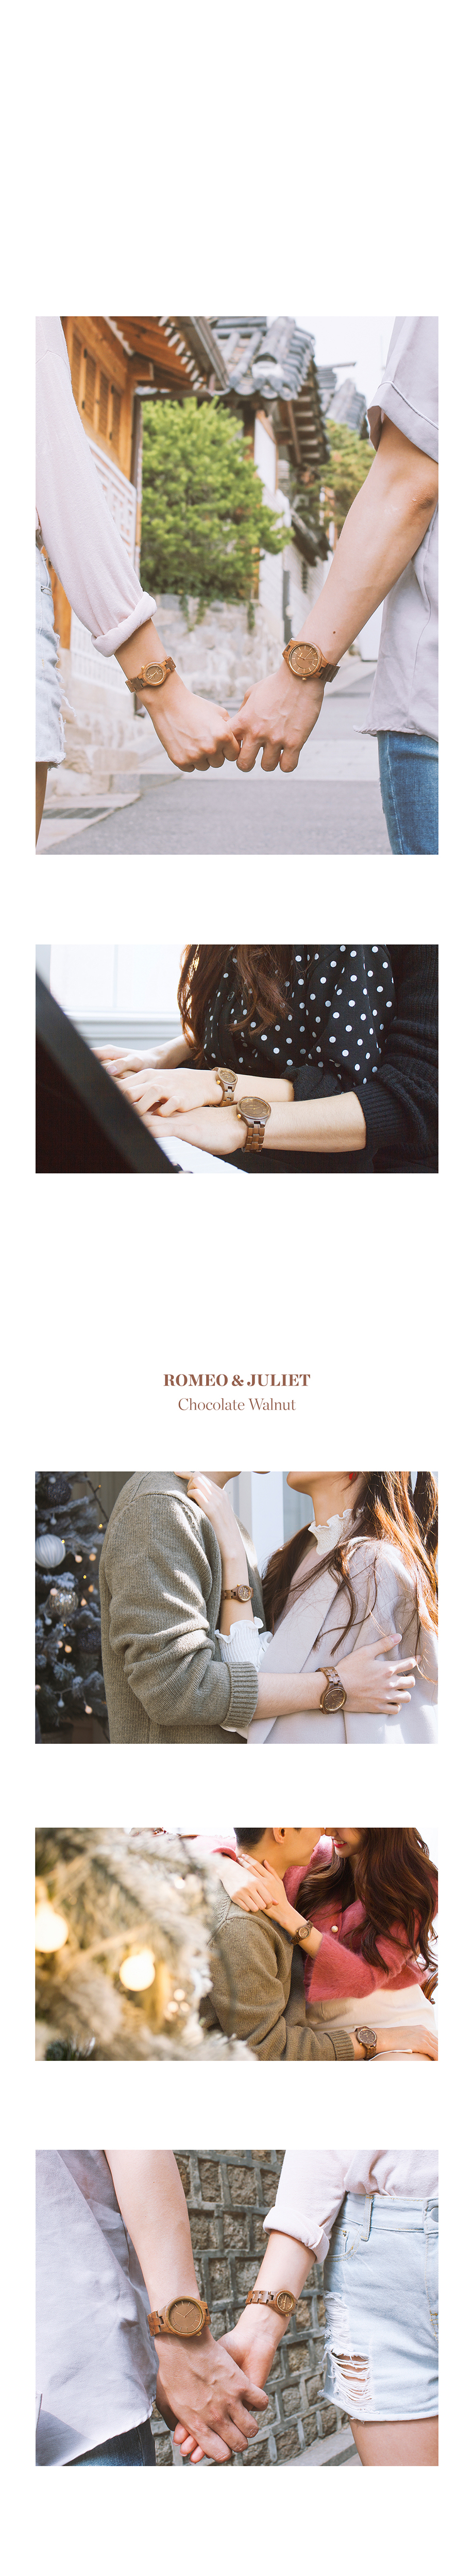 Romeo Juliet - Chocolate Walnut 395,000원 - 보우드 패션잡화, 손목시계, 여성패션시계, 가죽시계 바보사랑 Romeo Juliet - Chocolate Walnut 395,000원 - 보우드 패션잡화, 손목시계, 여성패션시계, 가죽시계 바보사랑